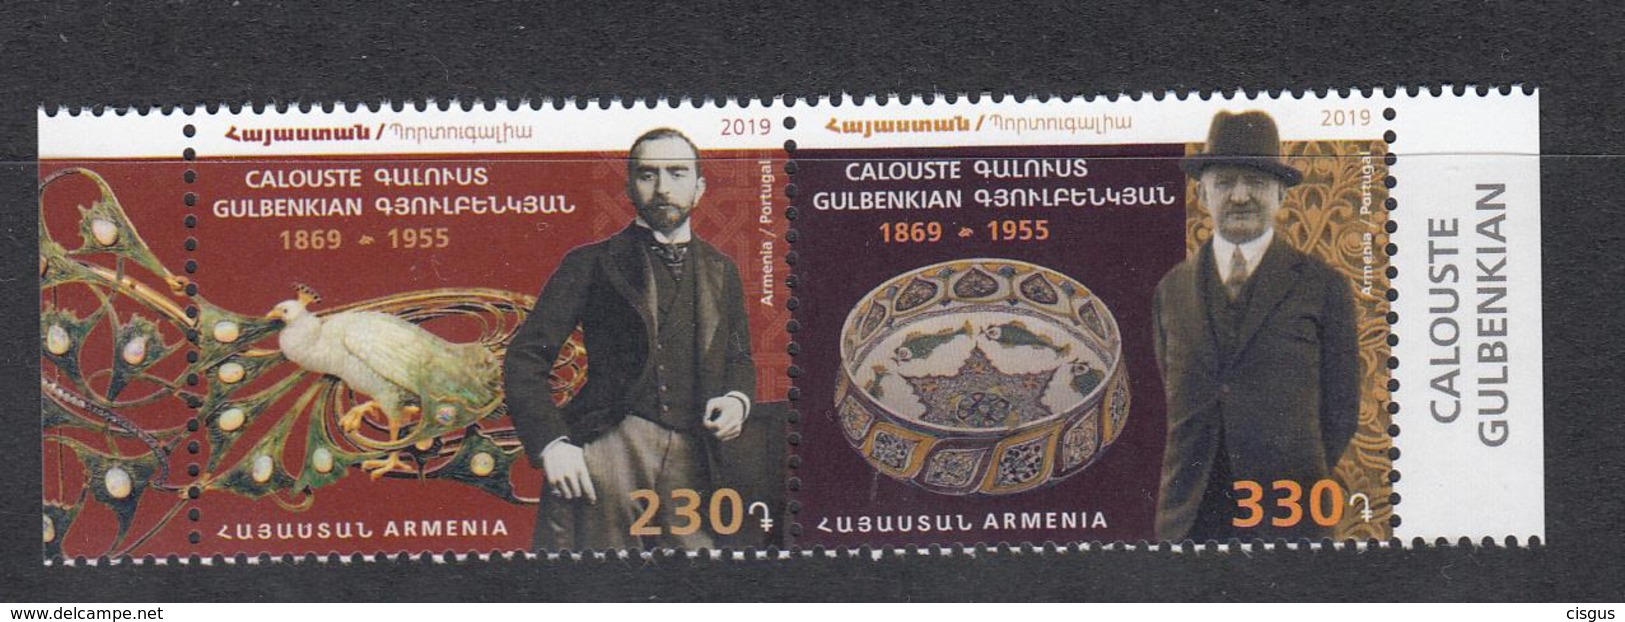 Armenia Armenien MNH** 2019 Joint Issue Portugal Mi 1110-1111 SALE - Arménie